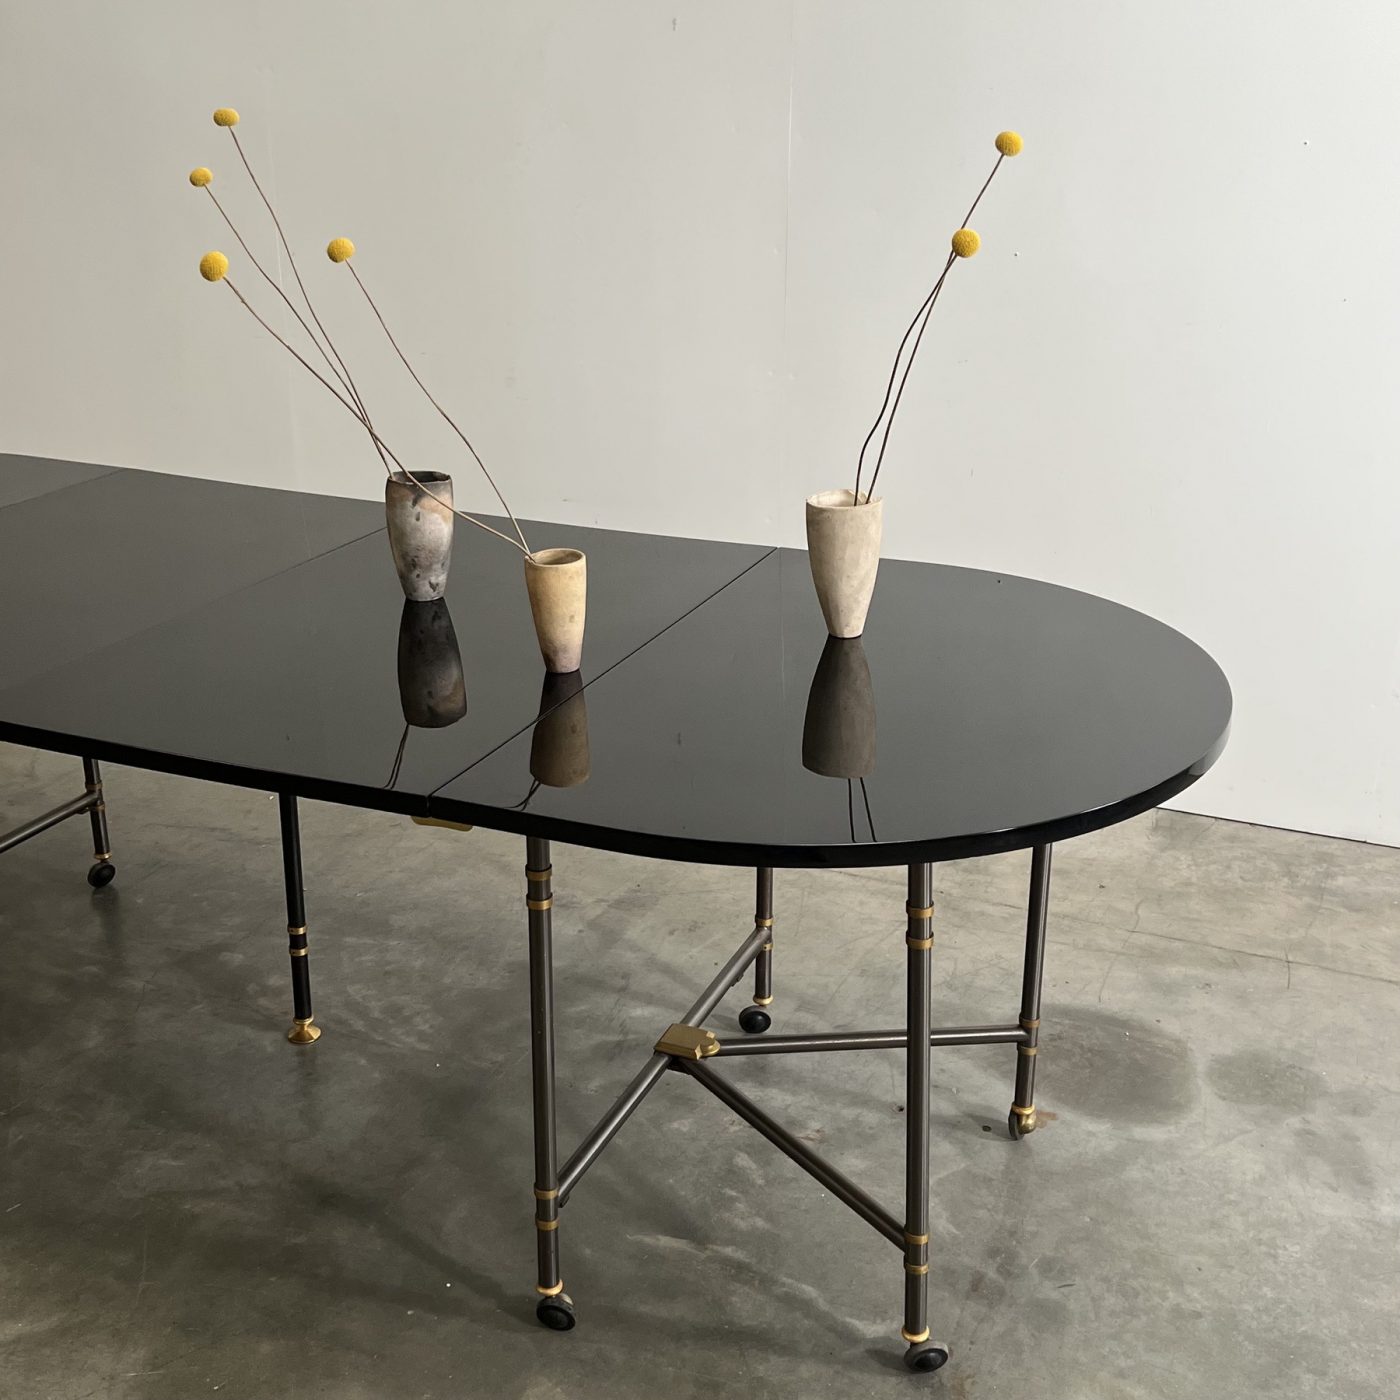 objet-vagabond-maisonjansen-table0006